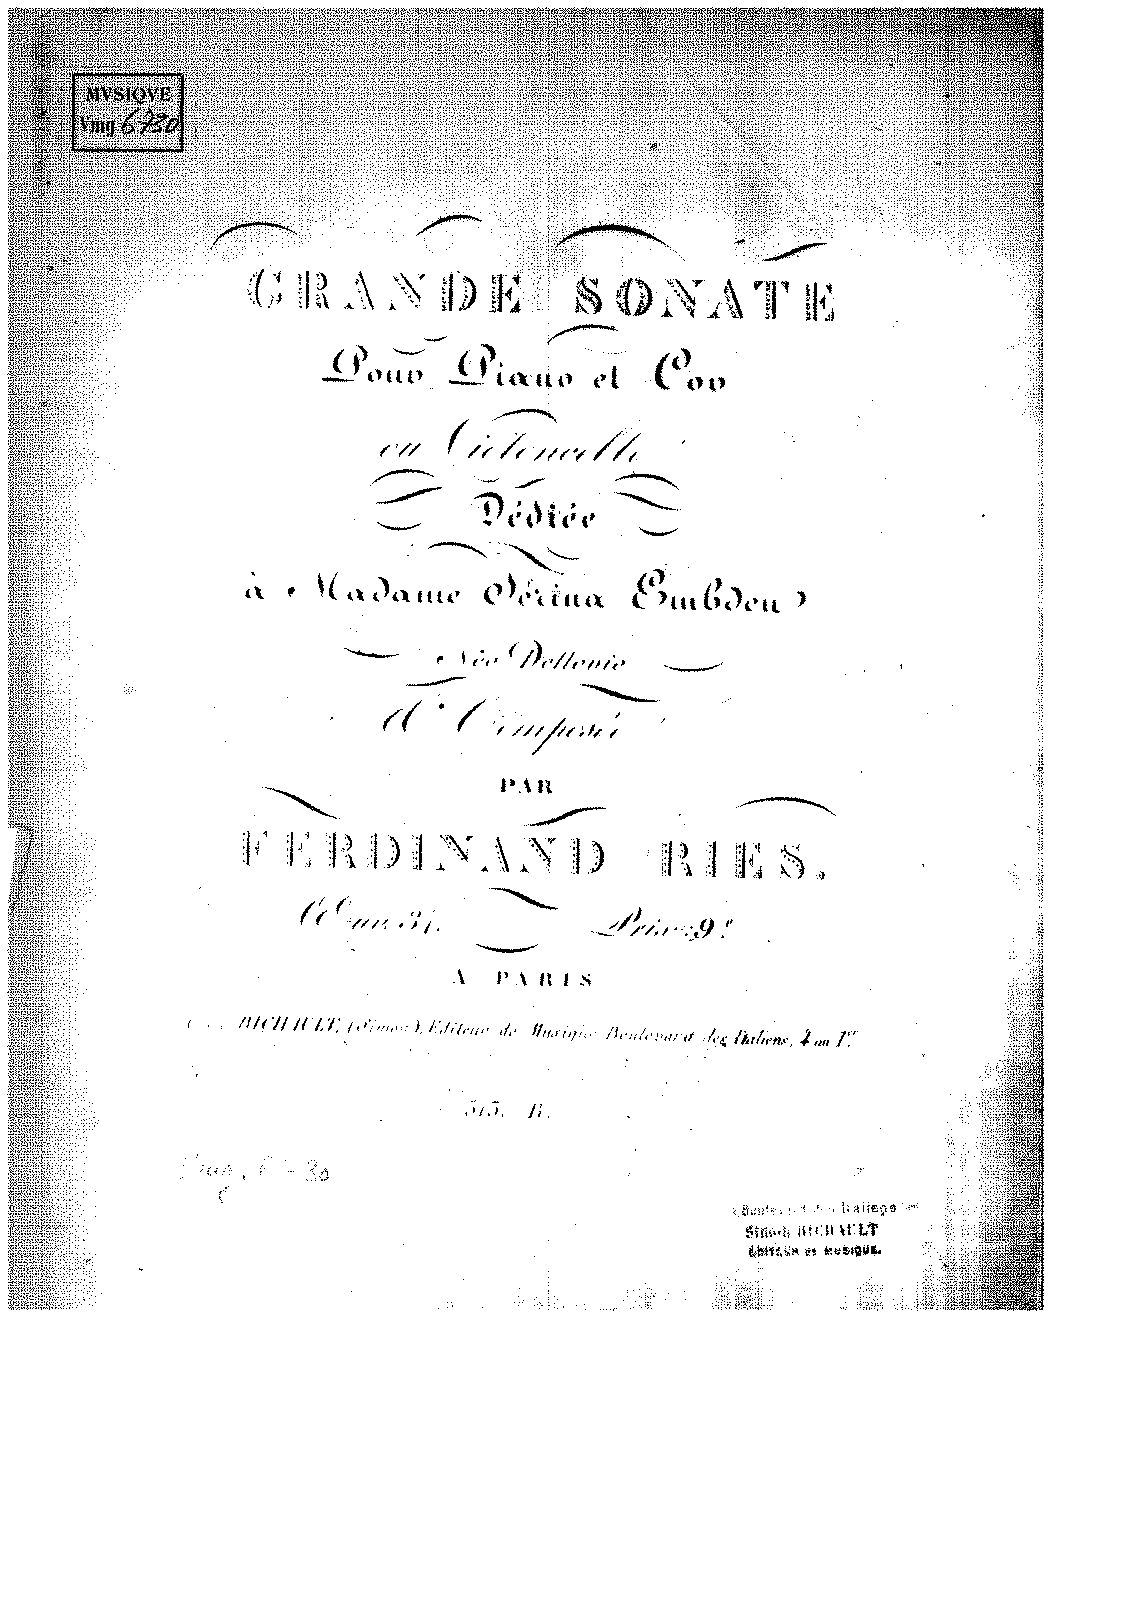 Horn Sonata, Op.34 (Ries, Ferdinand) - IMSLP: Free Sheet Music PDF Download